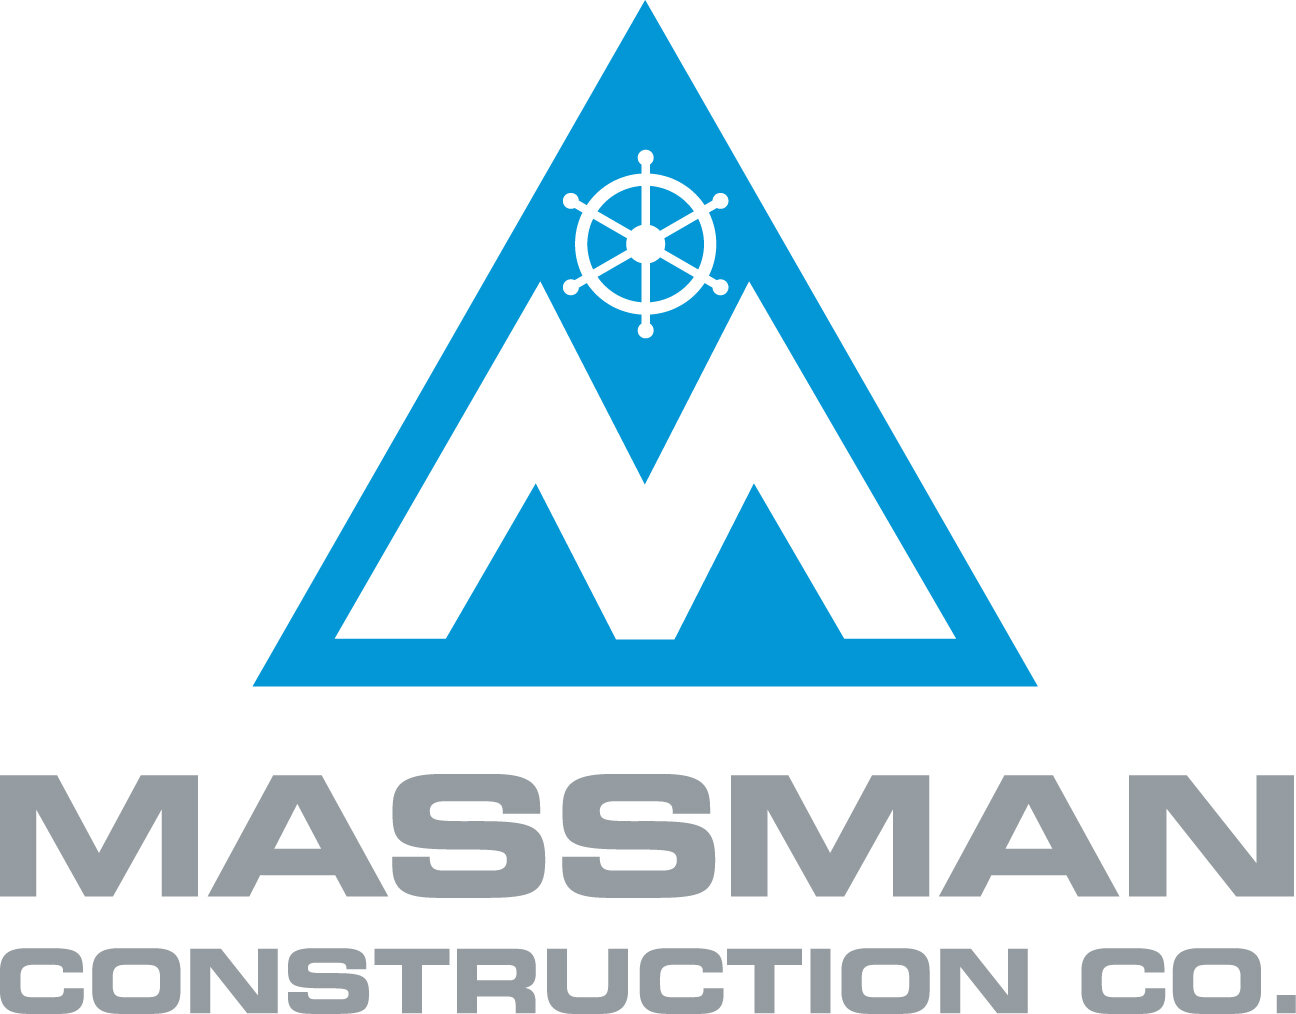 Massman Construction logo.jpg